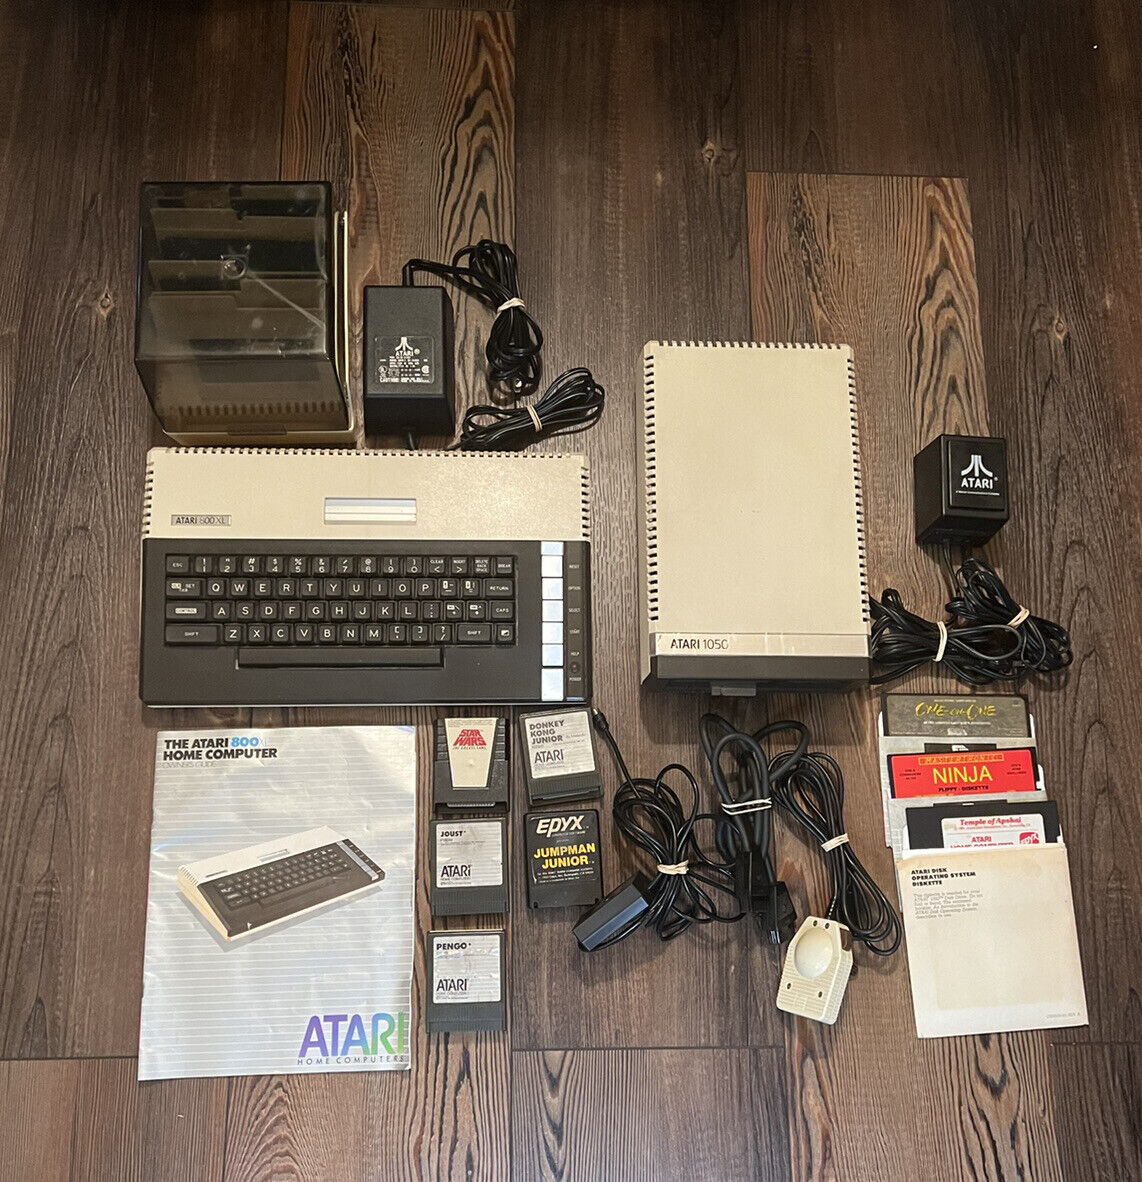 Atari 800XL with Atari 1050 with Manual / Games / and Power Supplies - Untested